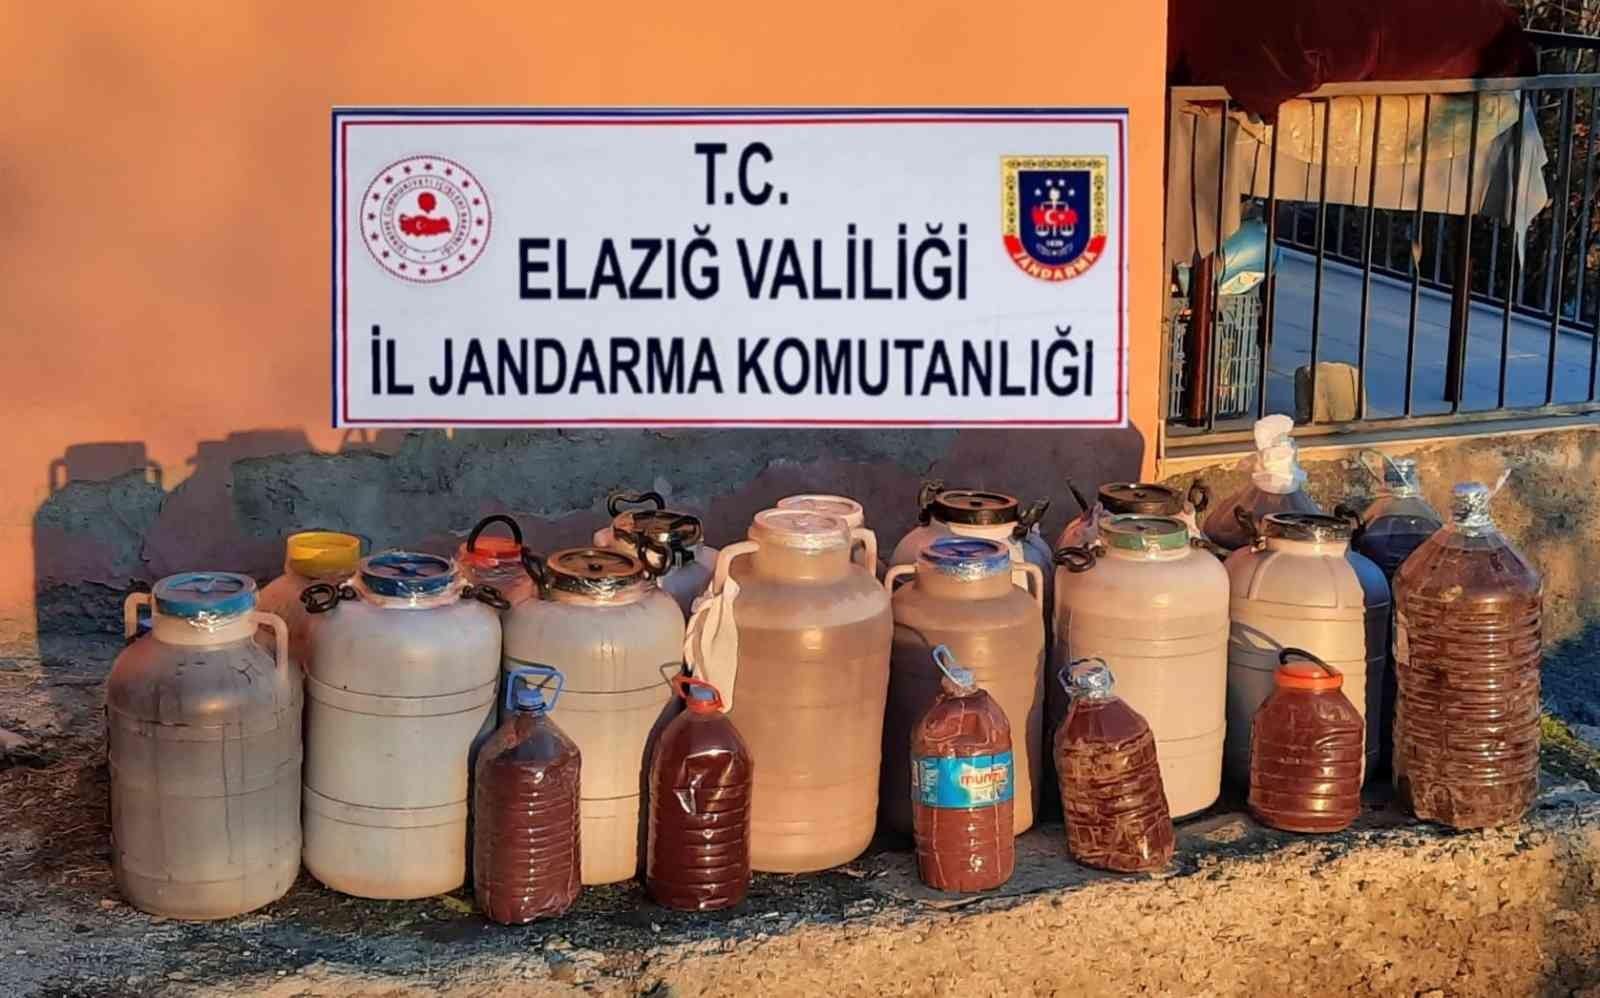 Elazığ’da 395 litre sahte içki ele geçirildi #elazig